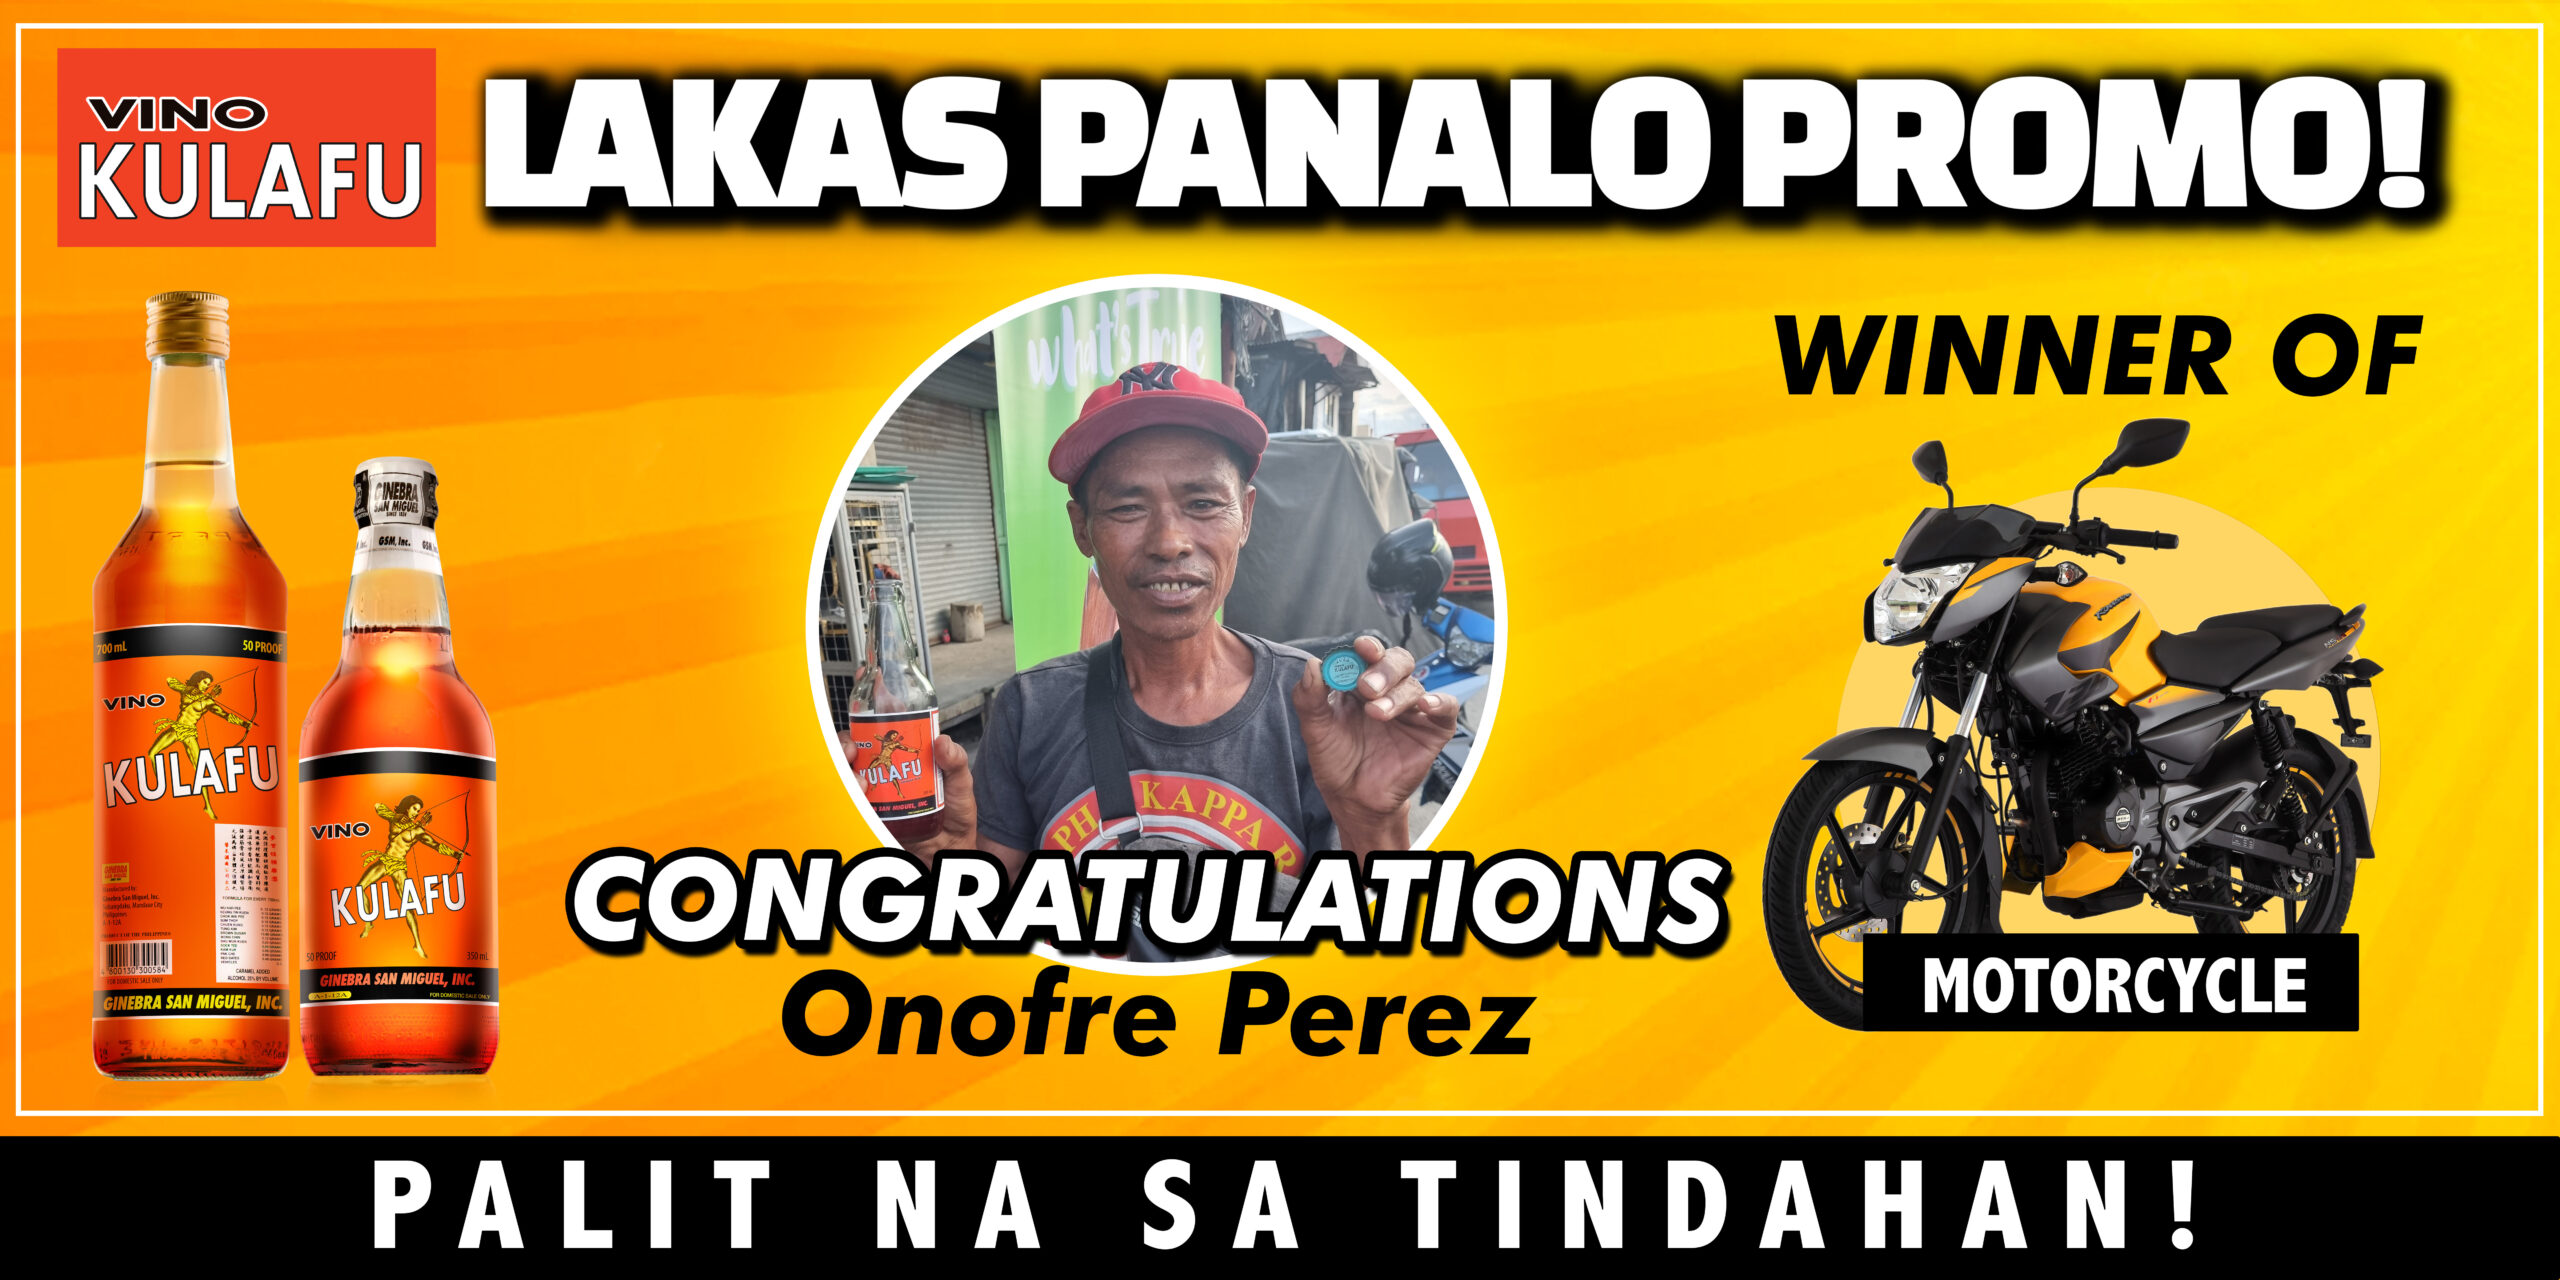 UTC Winner 2x4ft_Motorcycle_Onofre Perez